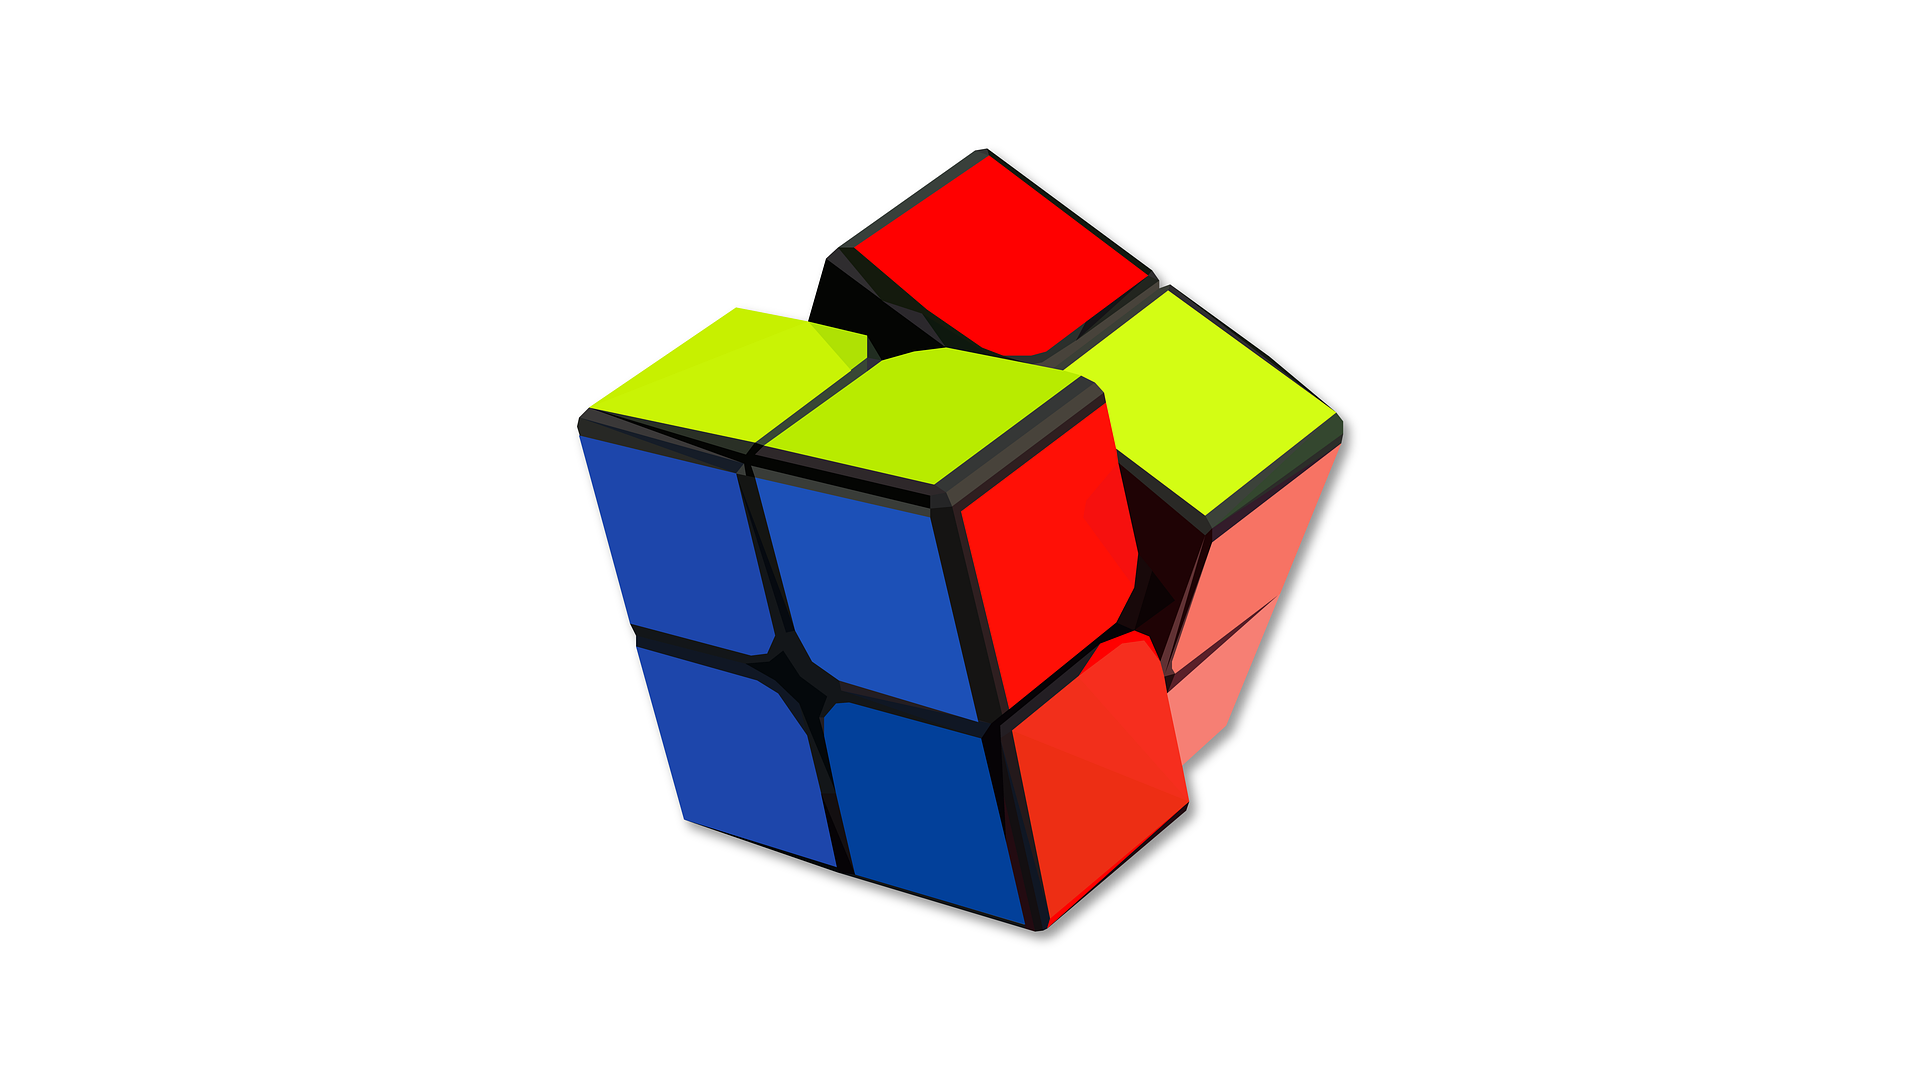 rubiks cube 2x2